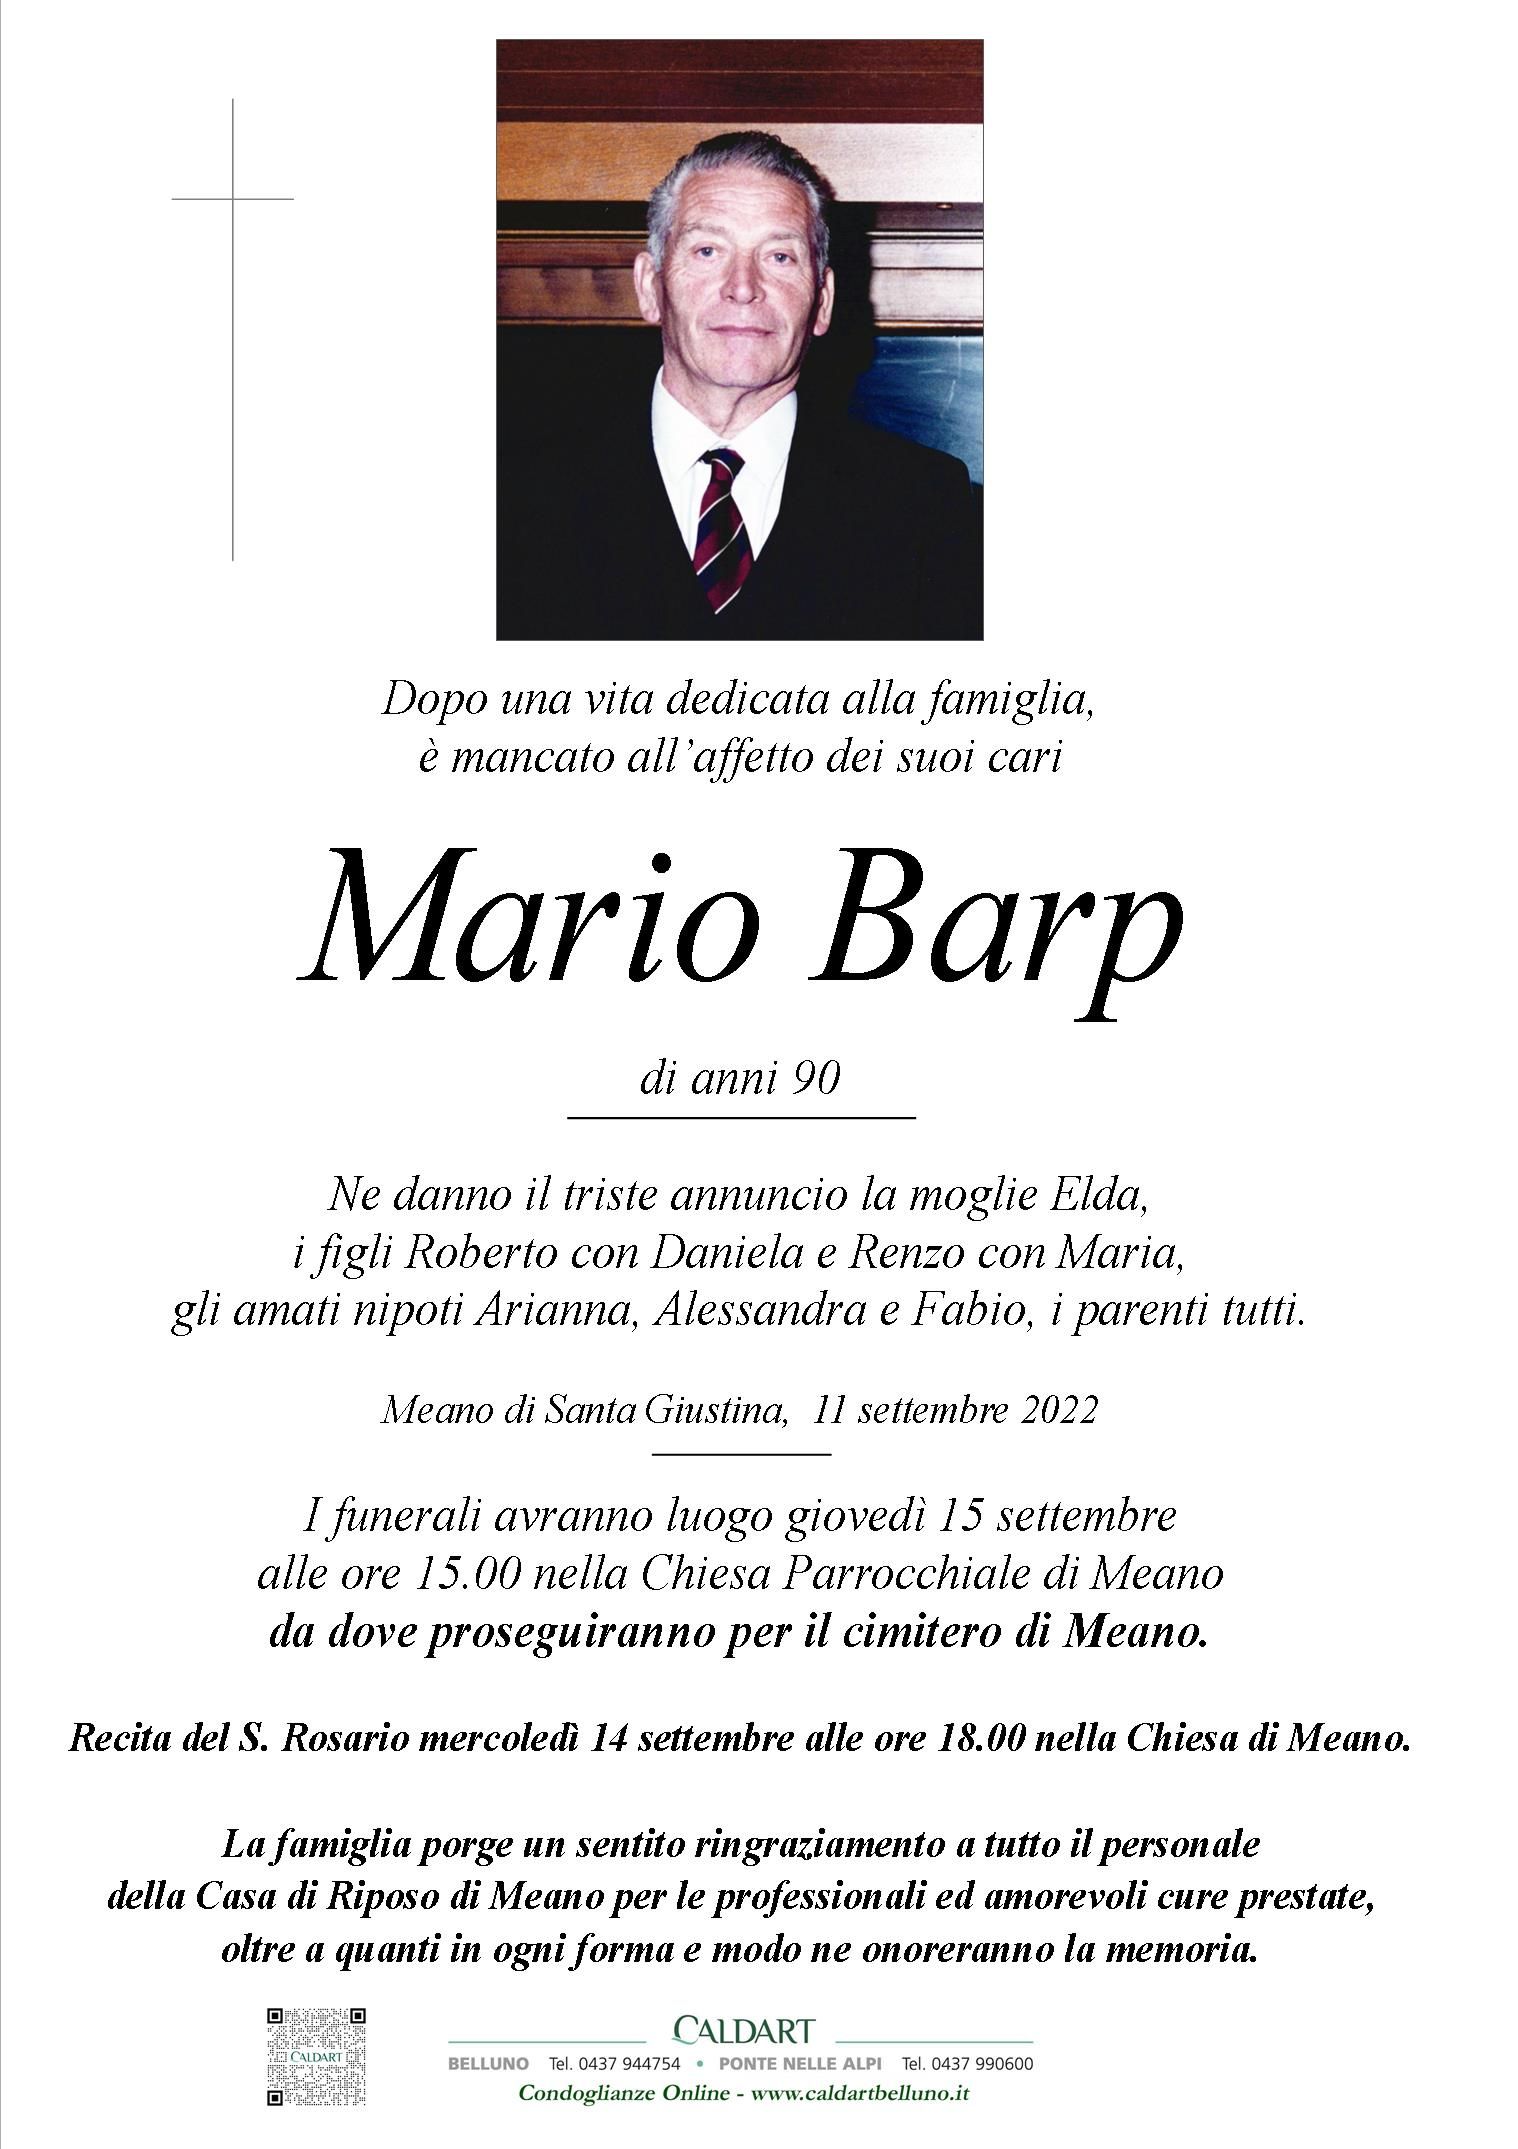 Barp Mario